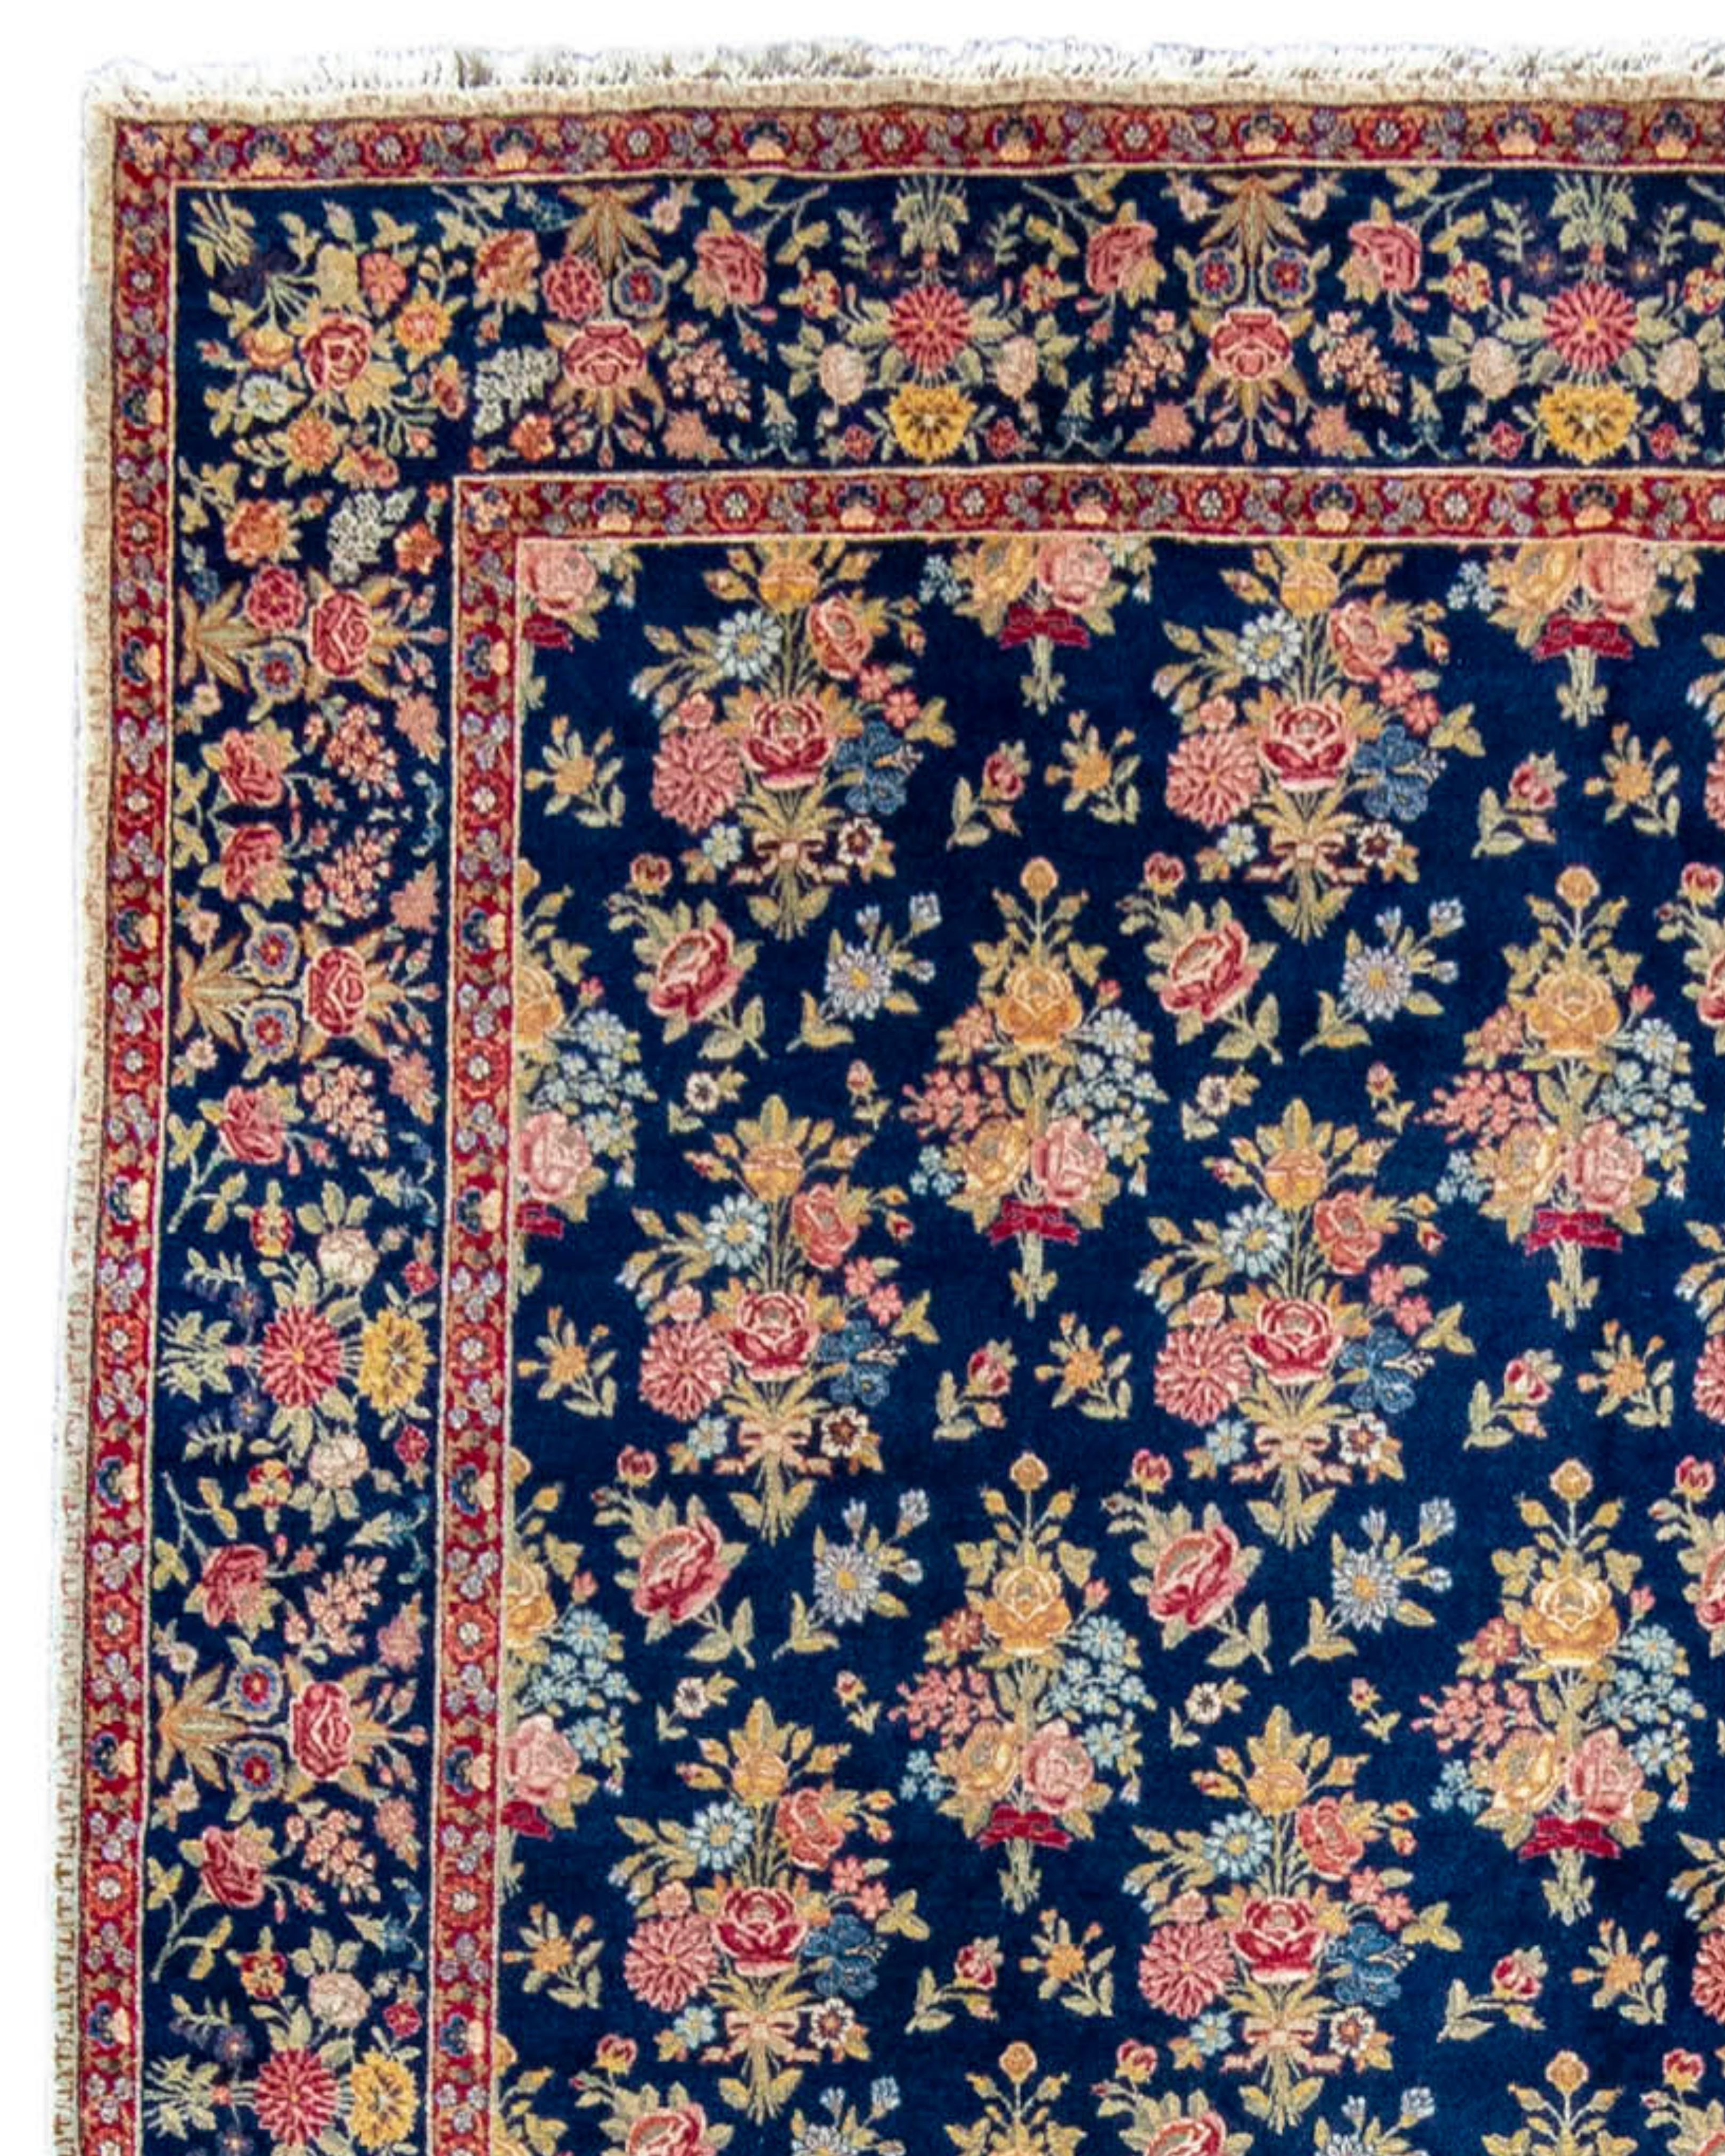 Antique Persian Floral Tabriz Carpet, c. 1900 In Excellent Condition For Sale In San Francisco, CA